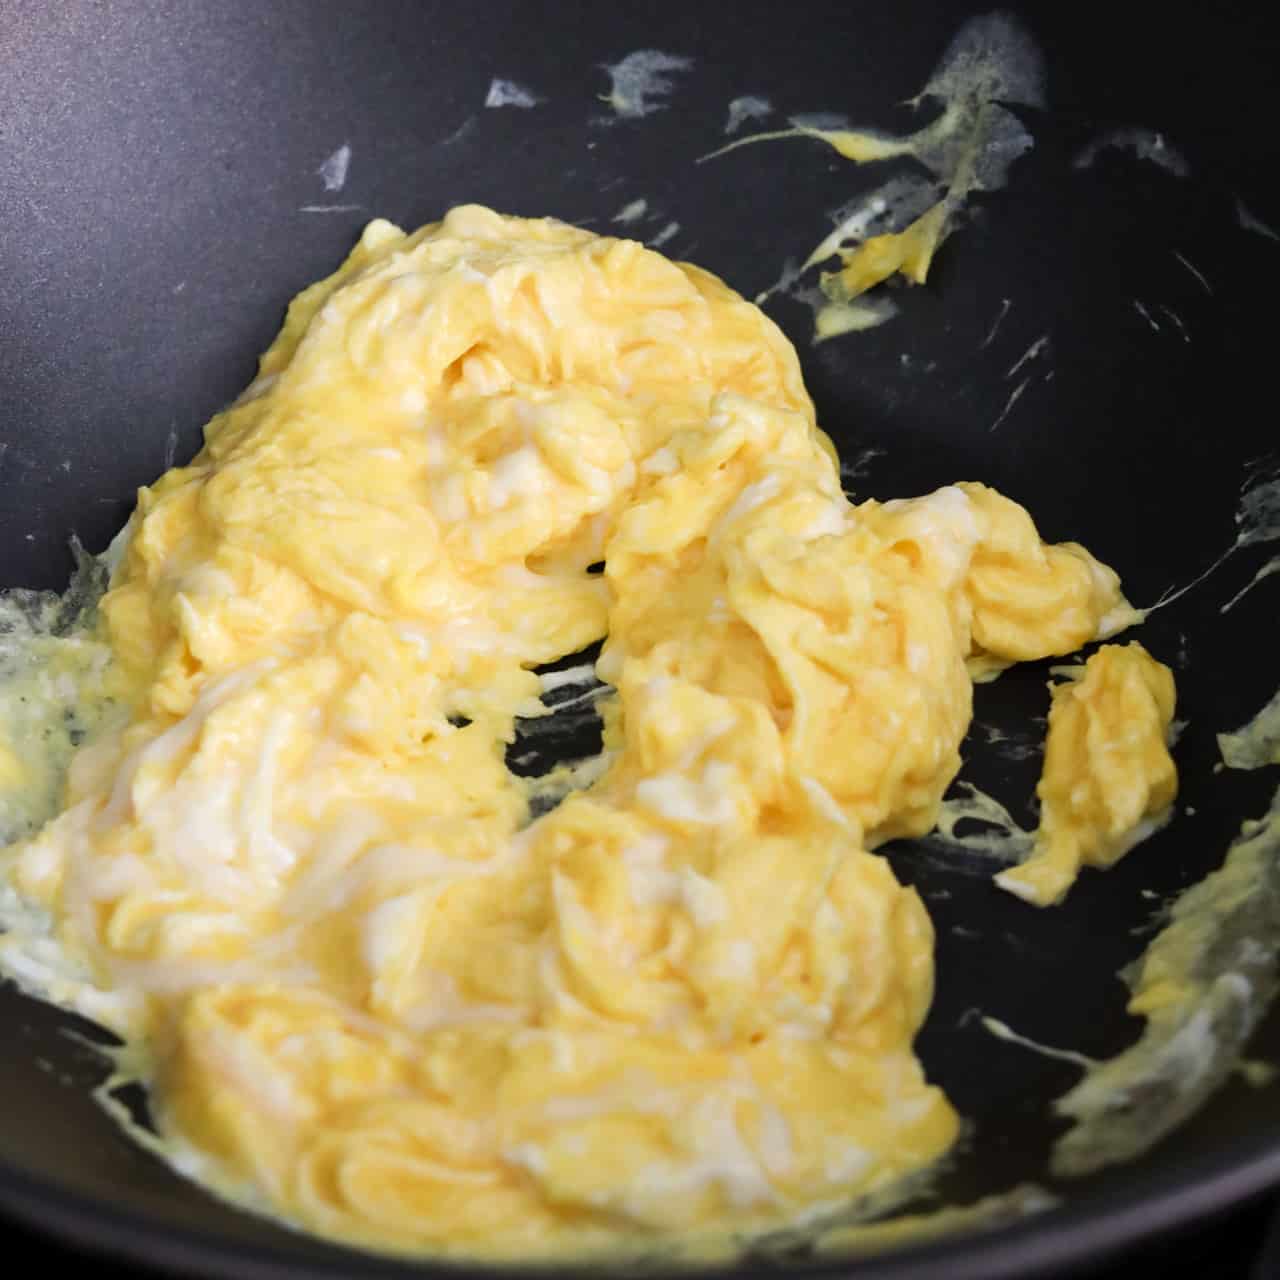 scramble eggs